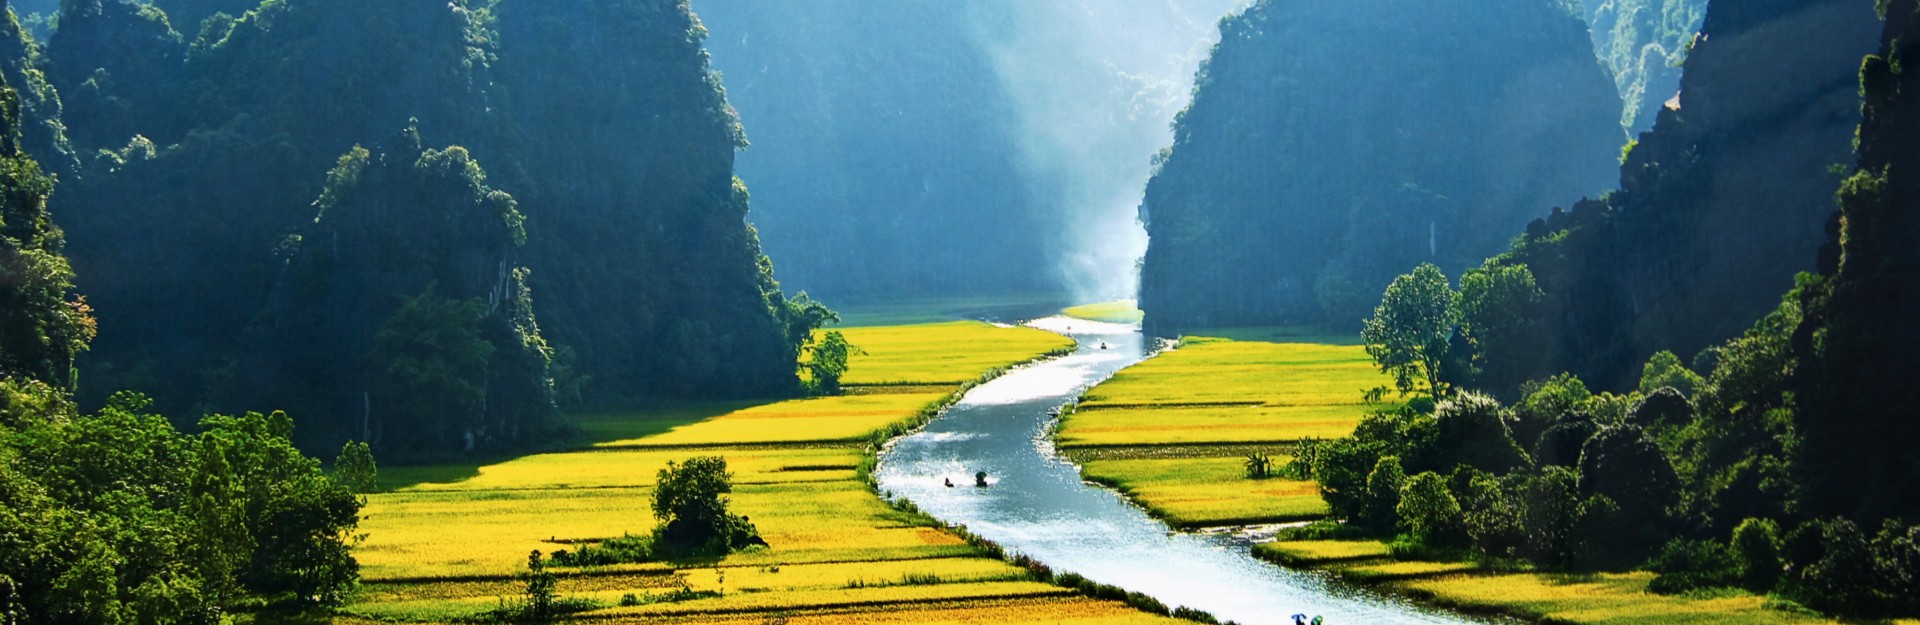 Visado de Vietnam